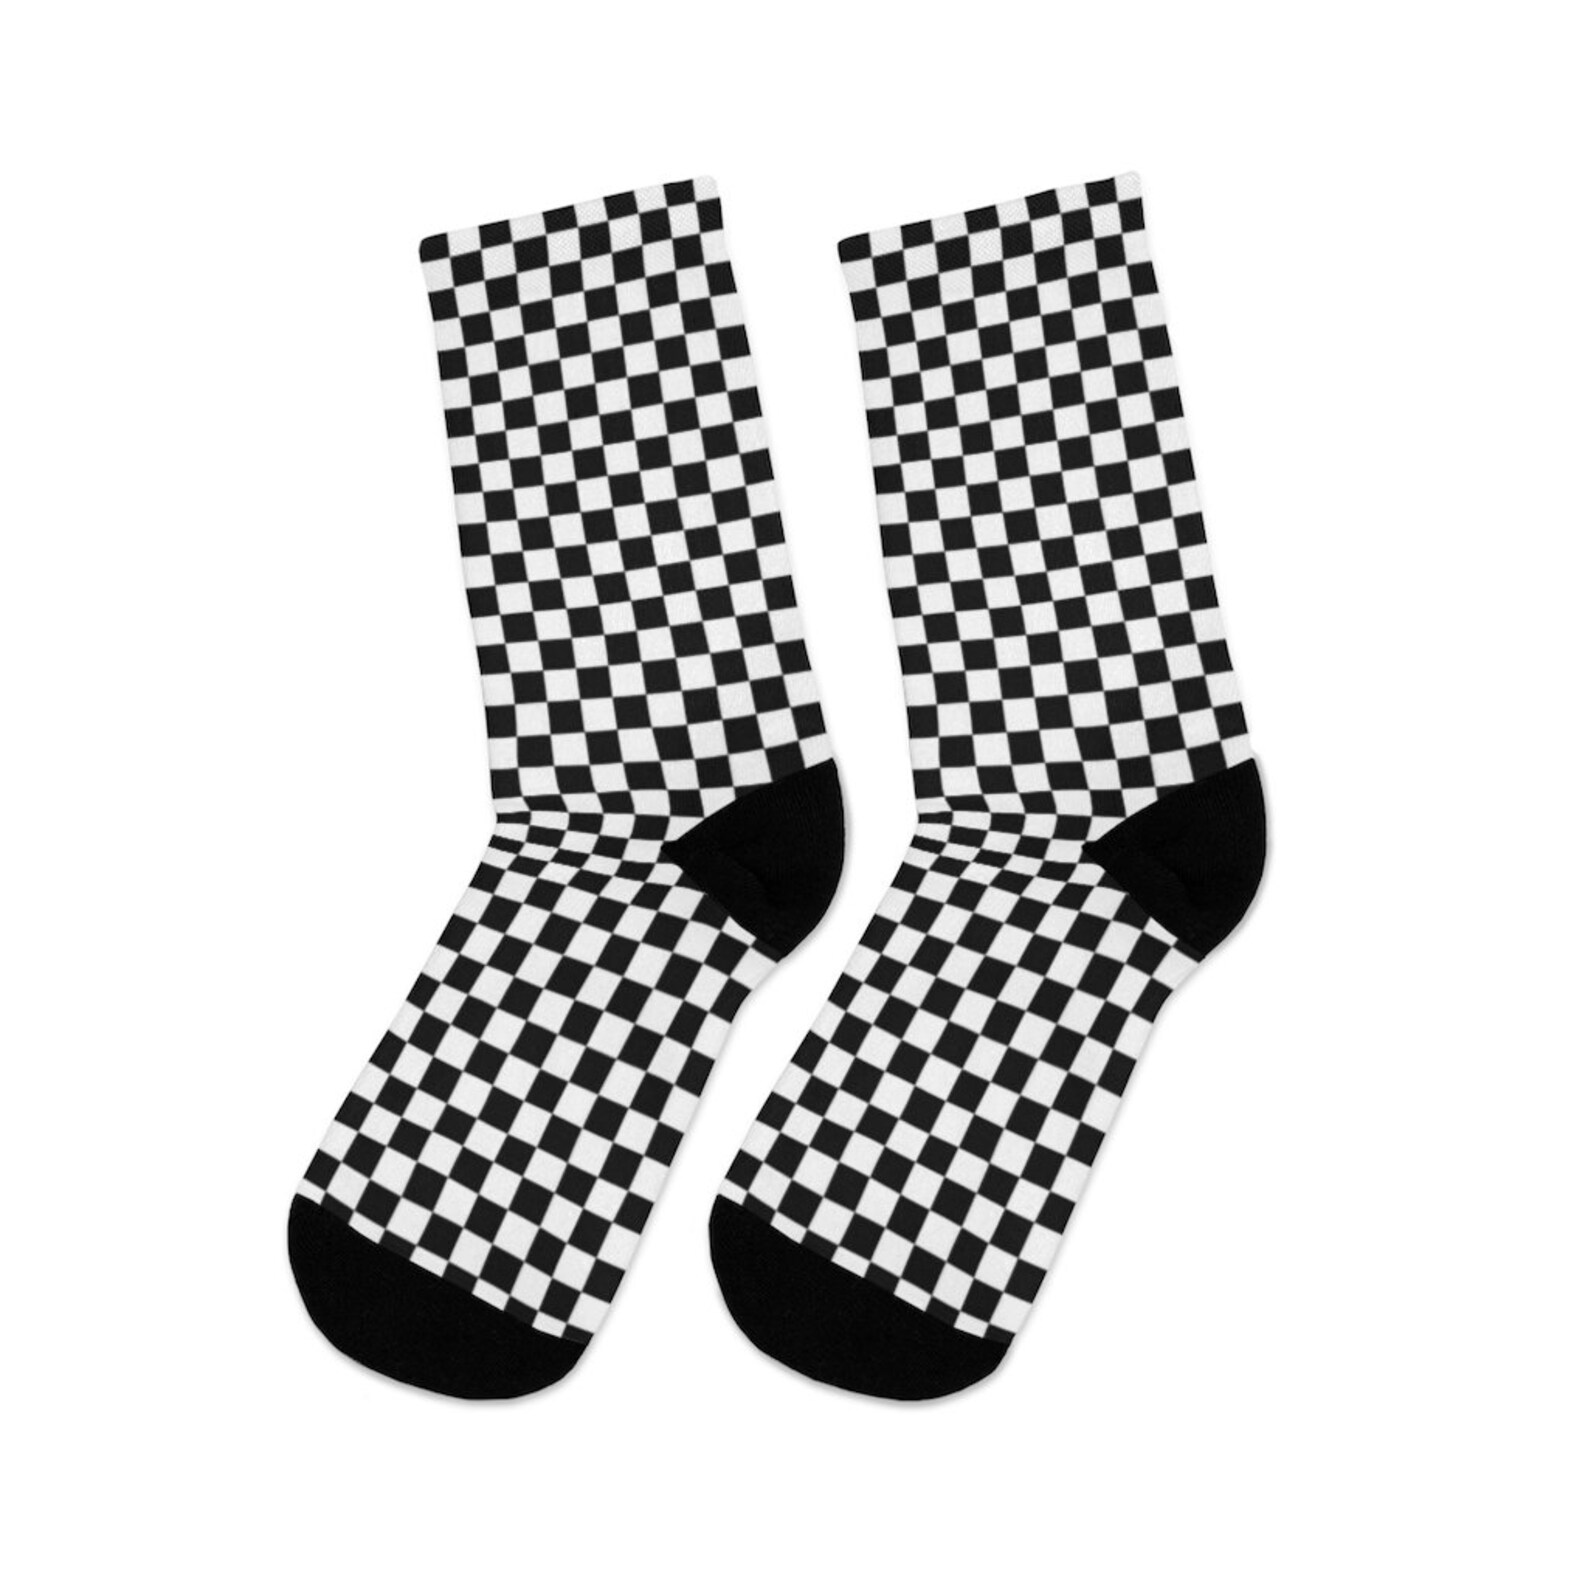 Checkerboard Print Socks Full Printed Black and White Cozy | Etsy